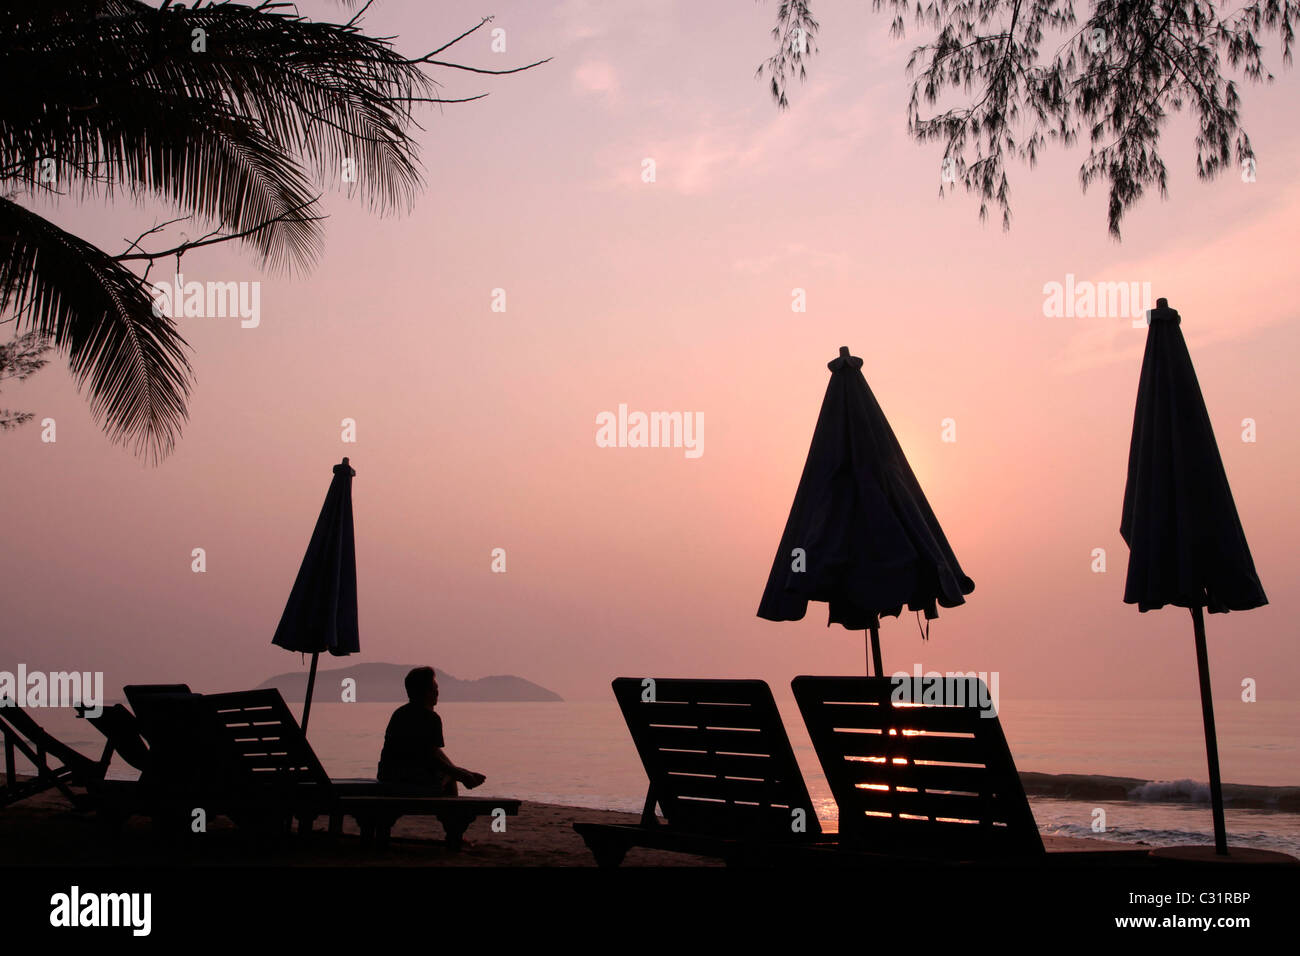 SUNSET OVER THE BEACH AT THE CORAL HOTEL, BANG SAPHAN, PRACHUAP KHIRI KHAN PROVINCE, THAILAND, ASIA Stock Photo